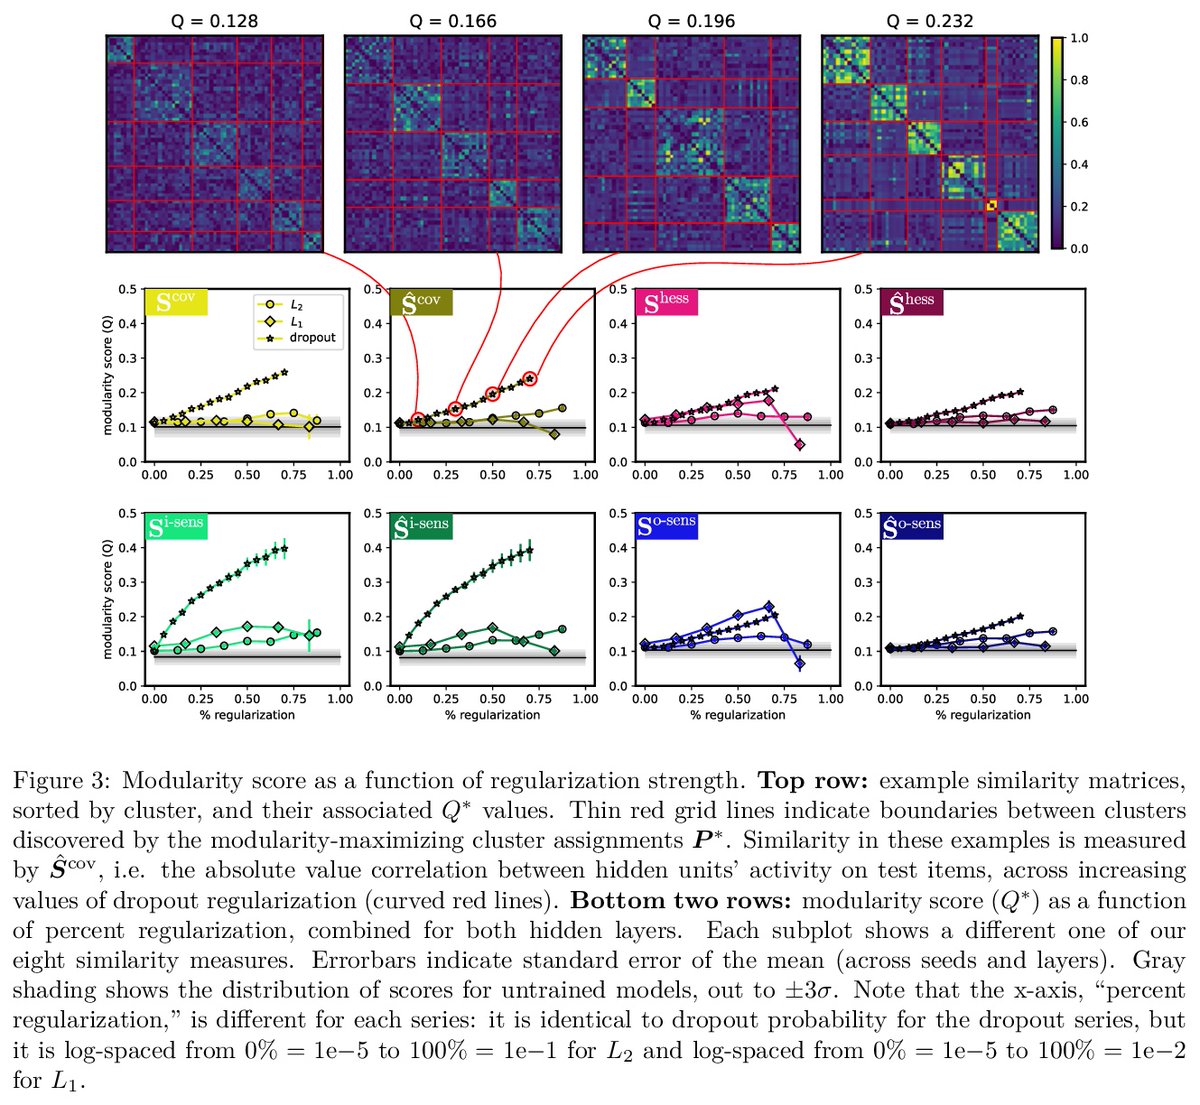 [LG] Clustering units in neural networks: upstream vs downstream information
R D. Lange, D S. Rolnick, K P. Kording [University of Pennsylvania & McGill University] (2022) 
arxiv.org/abs/2203.11815
#MachineLearning #ML #AI